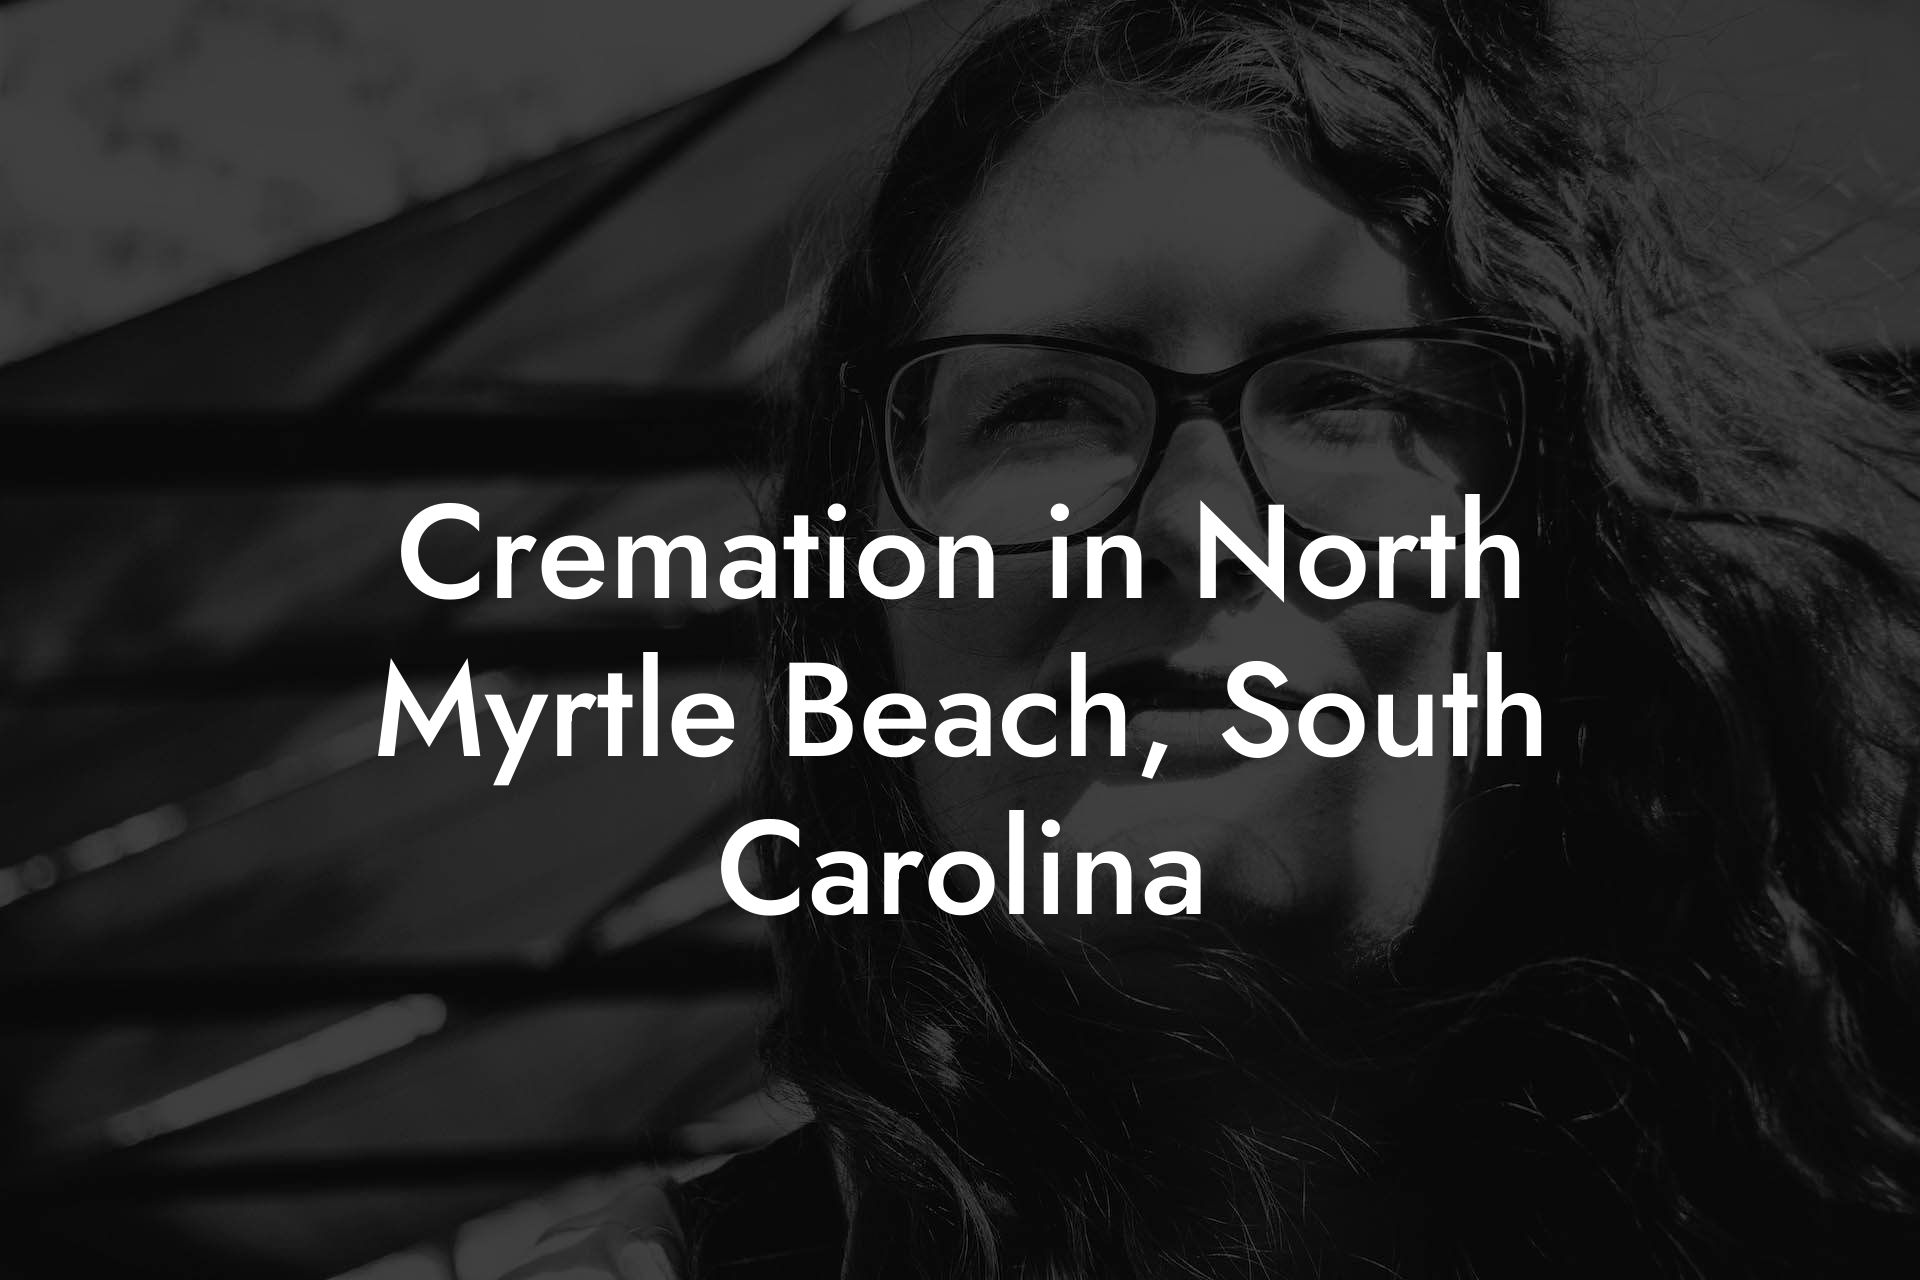 Cremation in North Myrtle Beach, South Carolina